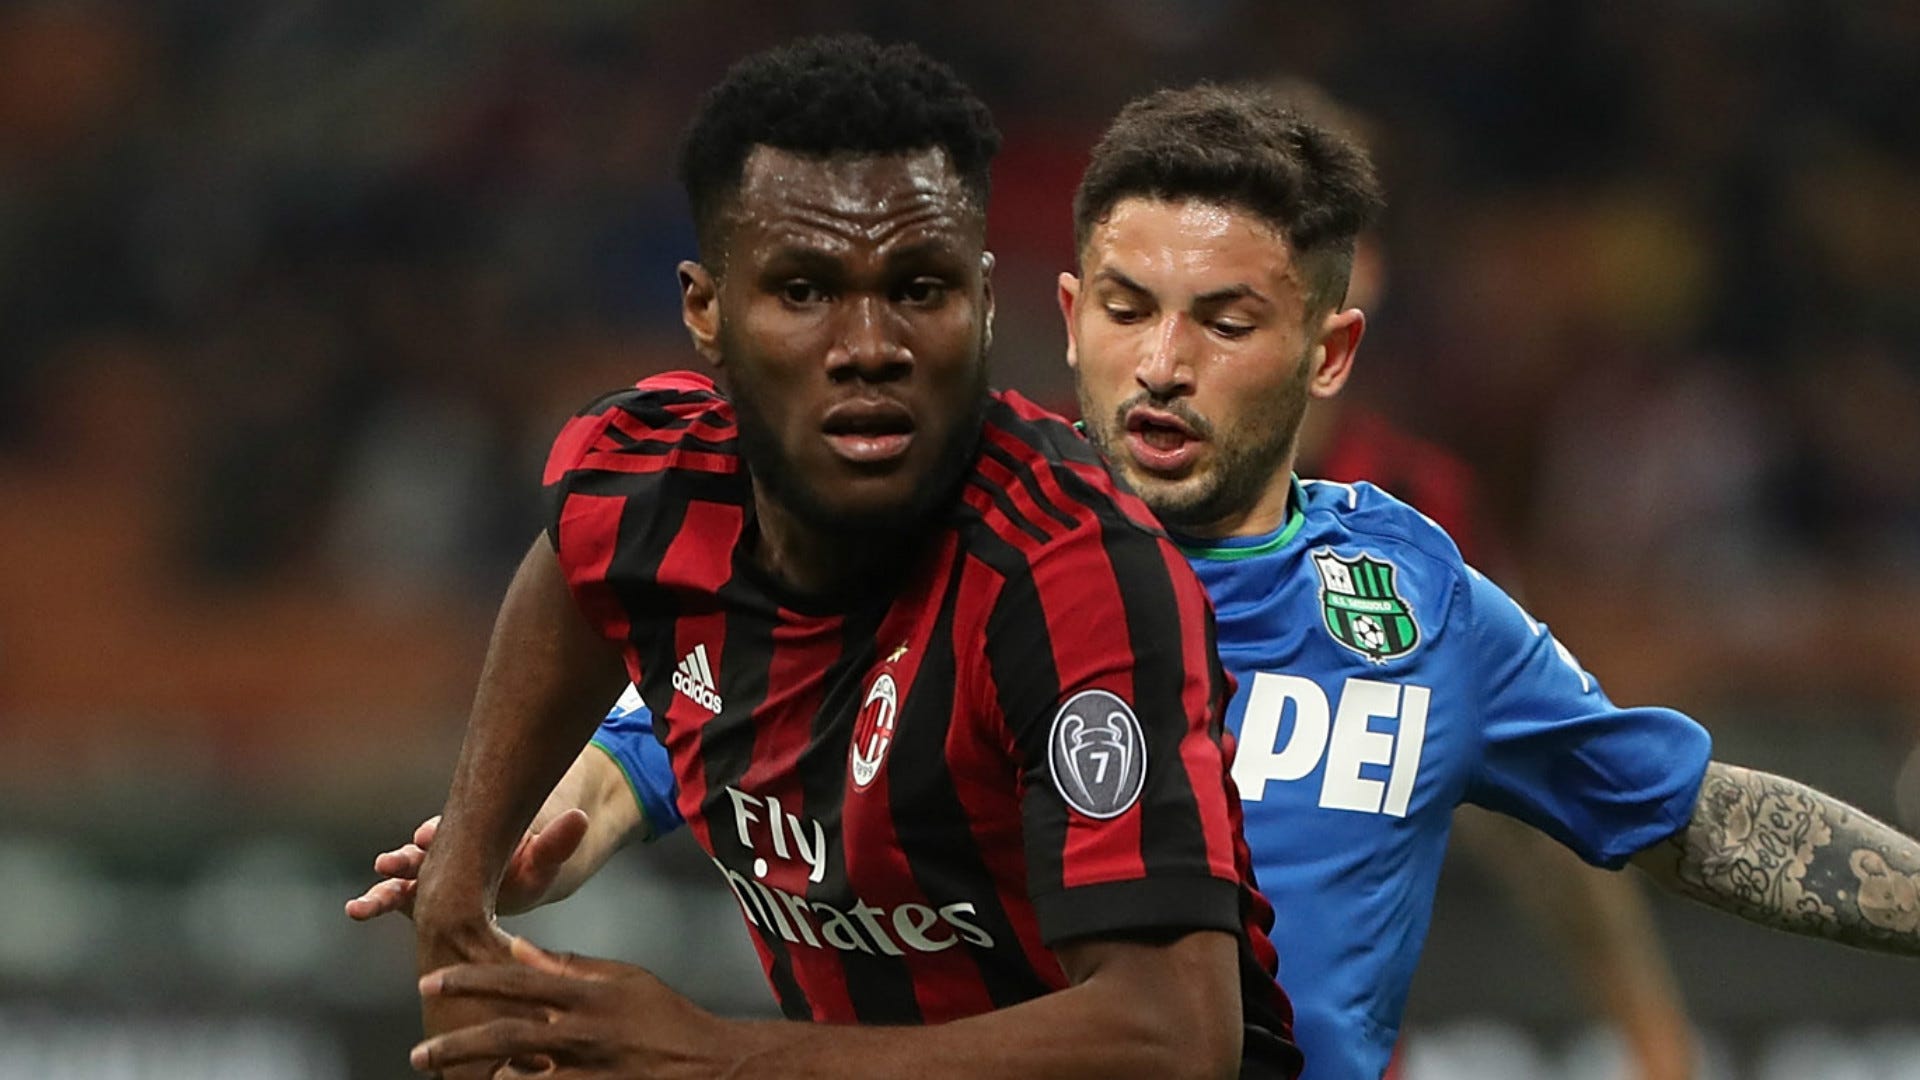 AC Milan midfielder Franck Kessie suspended for Fiorentina’s game